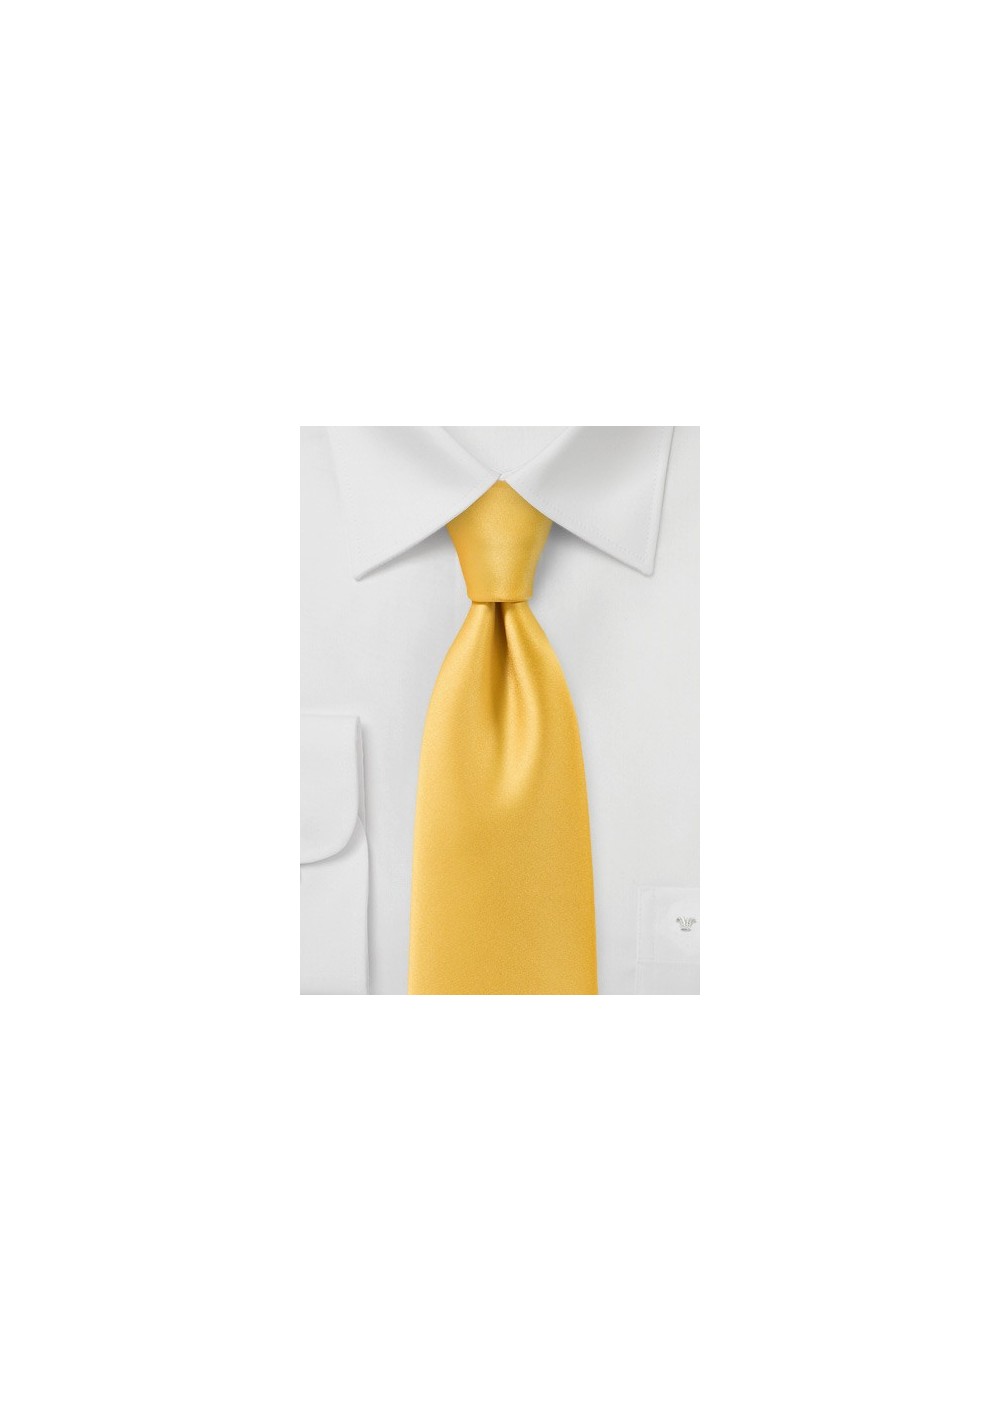 Daffodil Yellow Necktie